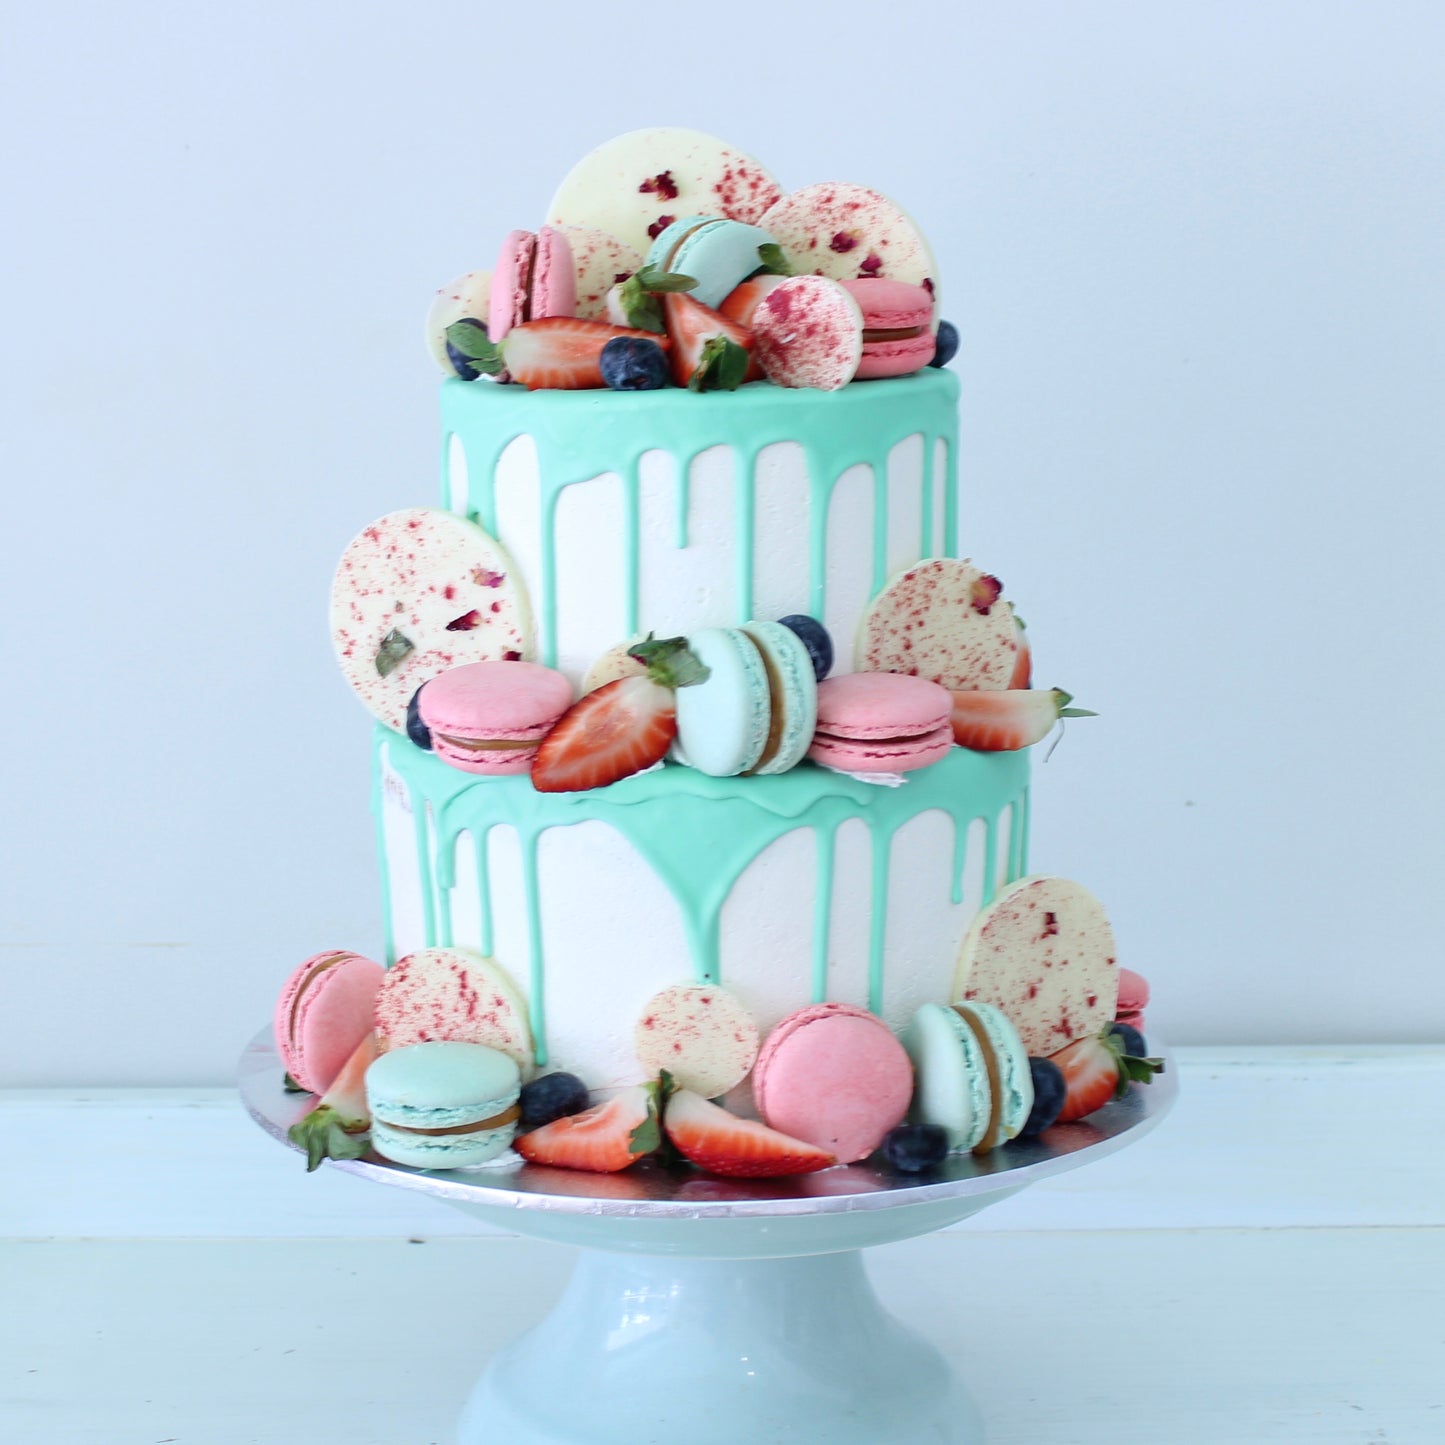 2 Tier Aqua Drizzle Cake with Macaron's, Chocolates & Berries